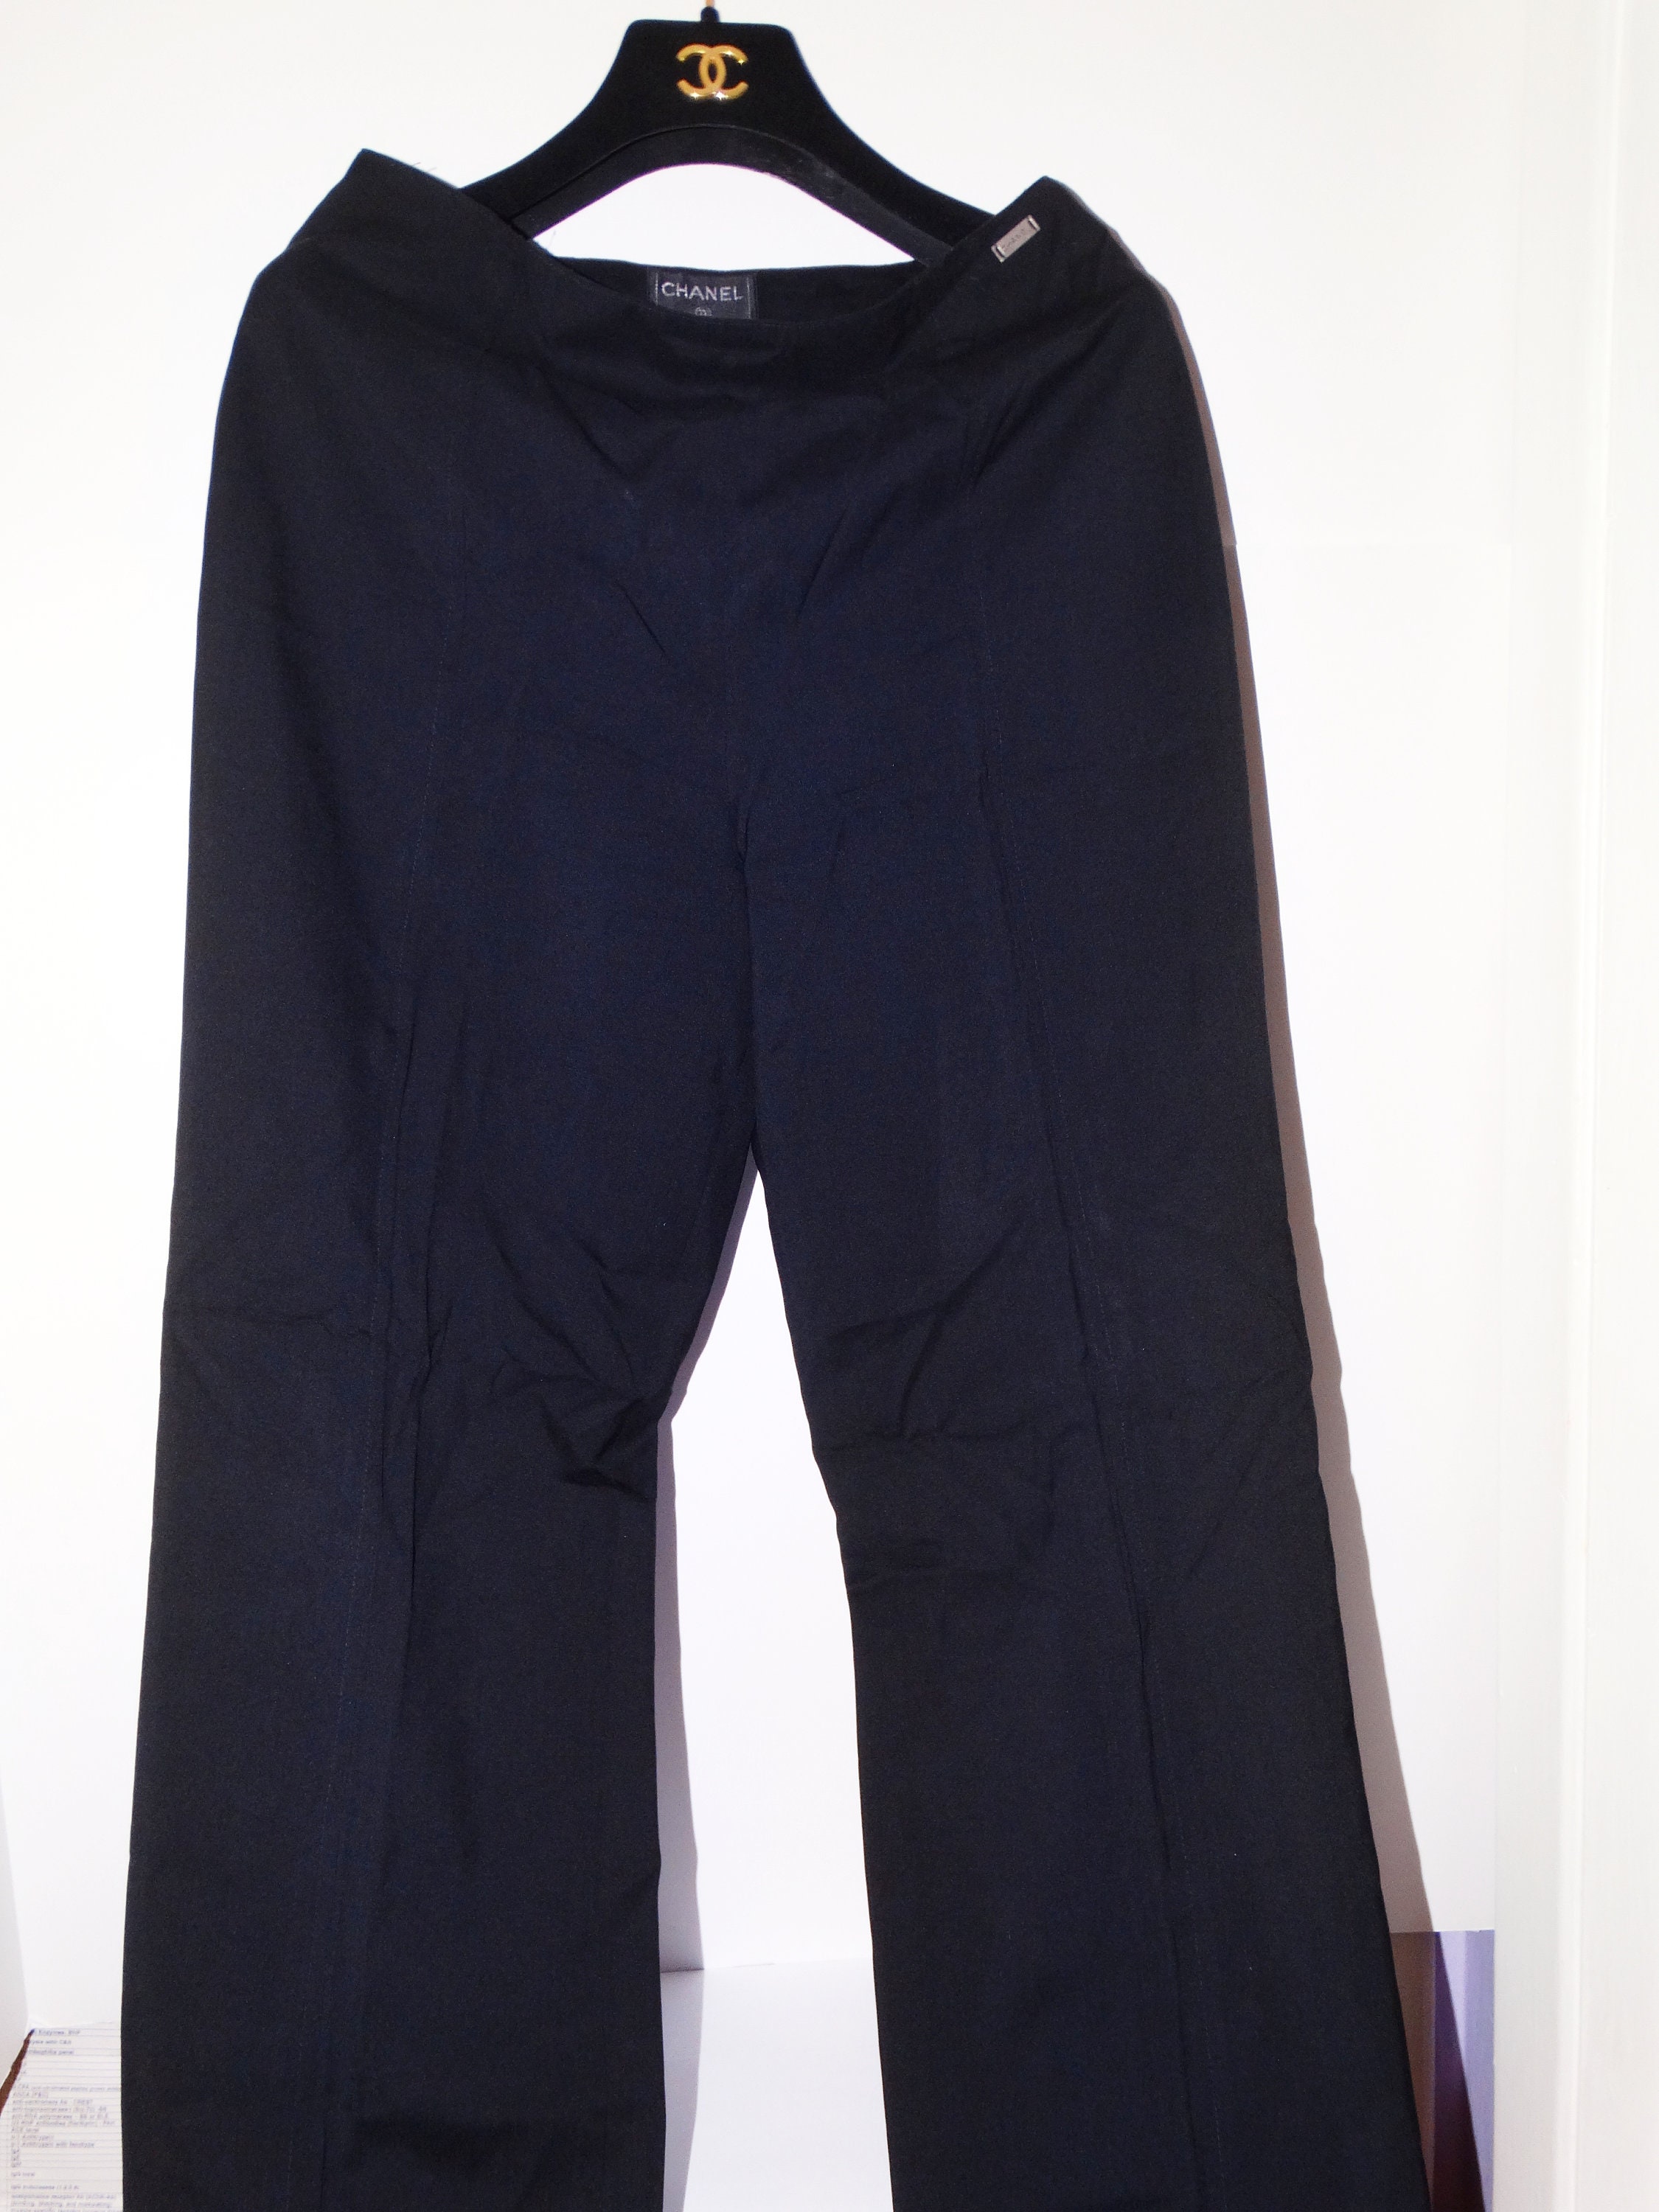 Chanel 00A 2000 Fall Black Shiny Dress Wide Leg Pants FR 38 US 4/6